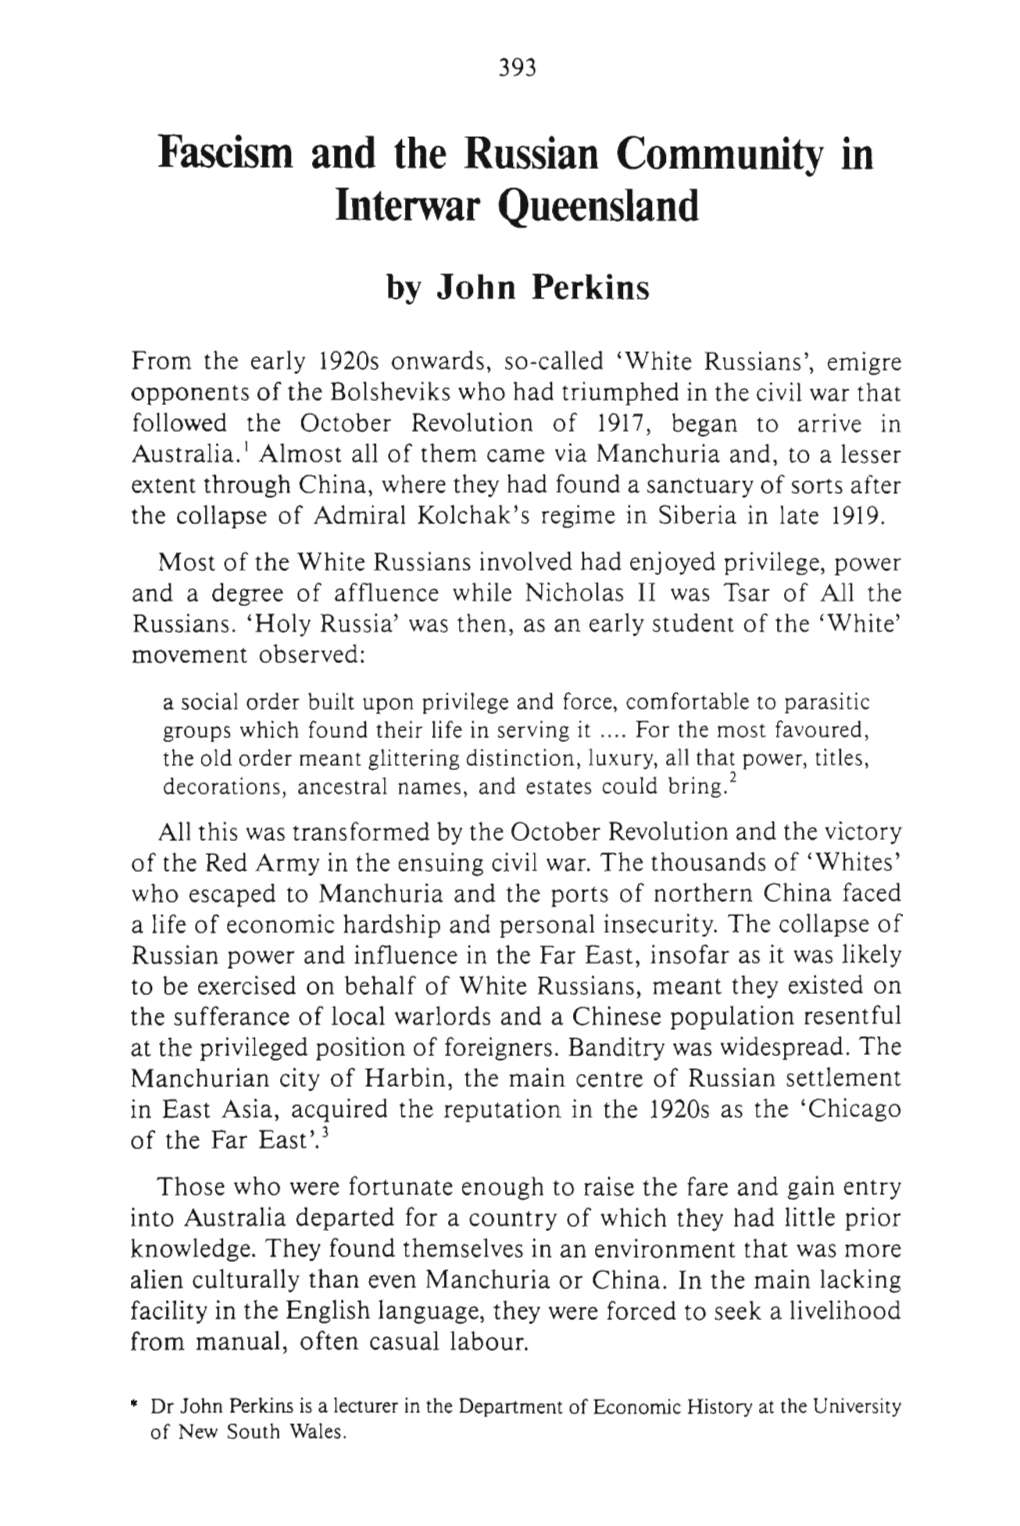 Fascism and the Russian Community in Interwar Queensland by John Perkins